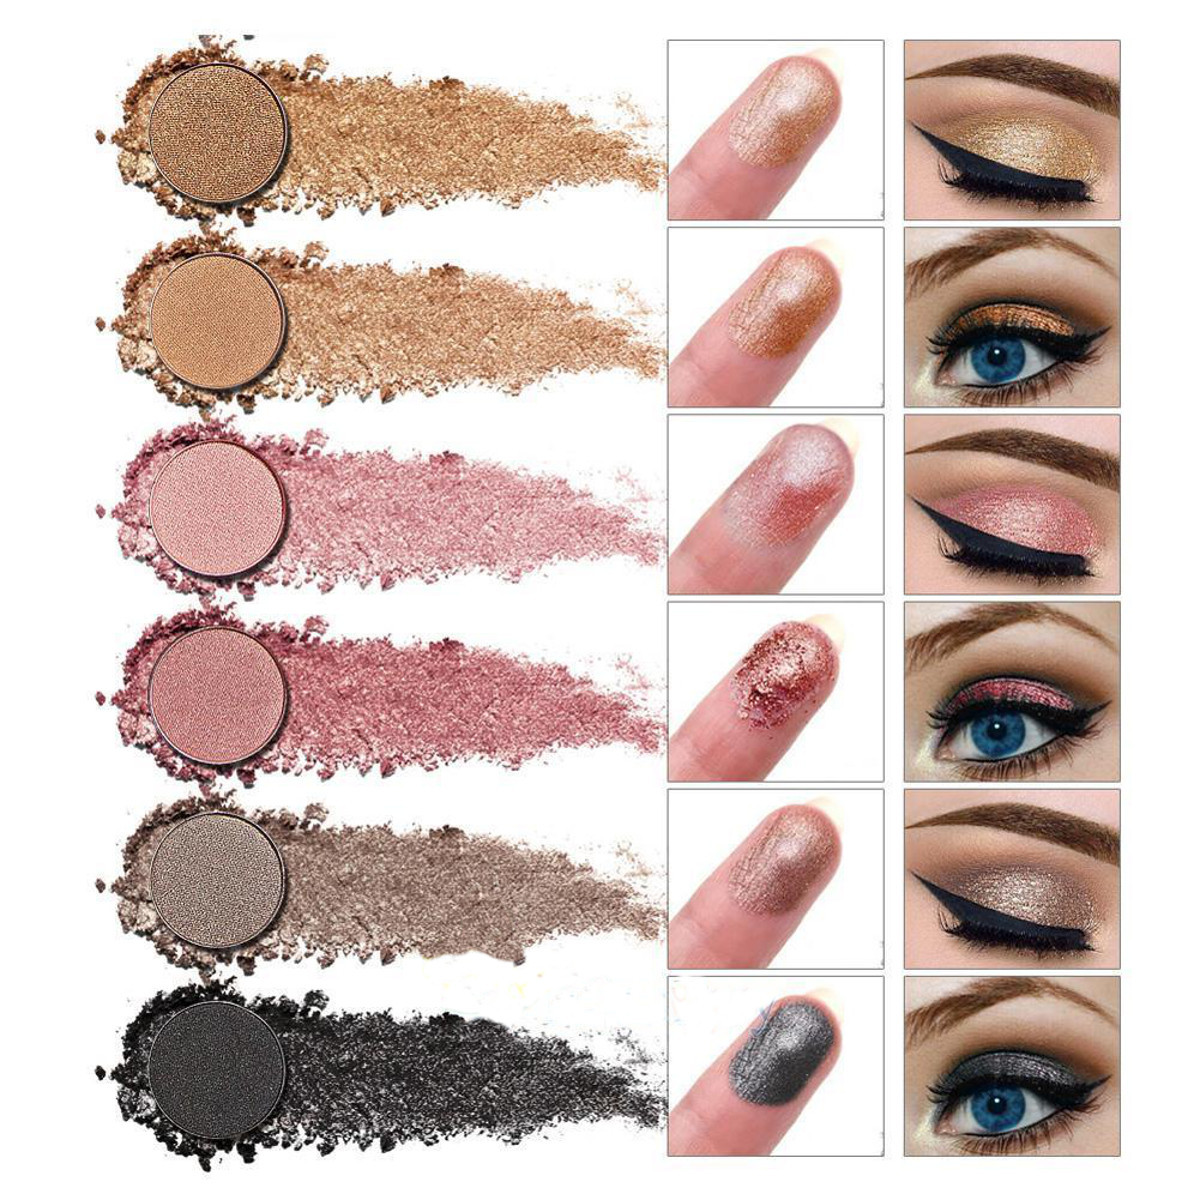 15-Colors-Matte-Shimmer-Eyeshadow-Palette-Makeup-Cosmetic-Eye-Shadow-Set-1147945